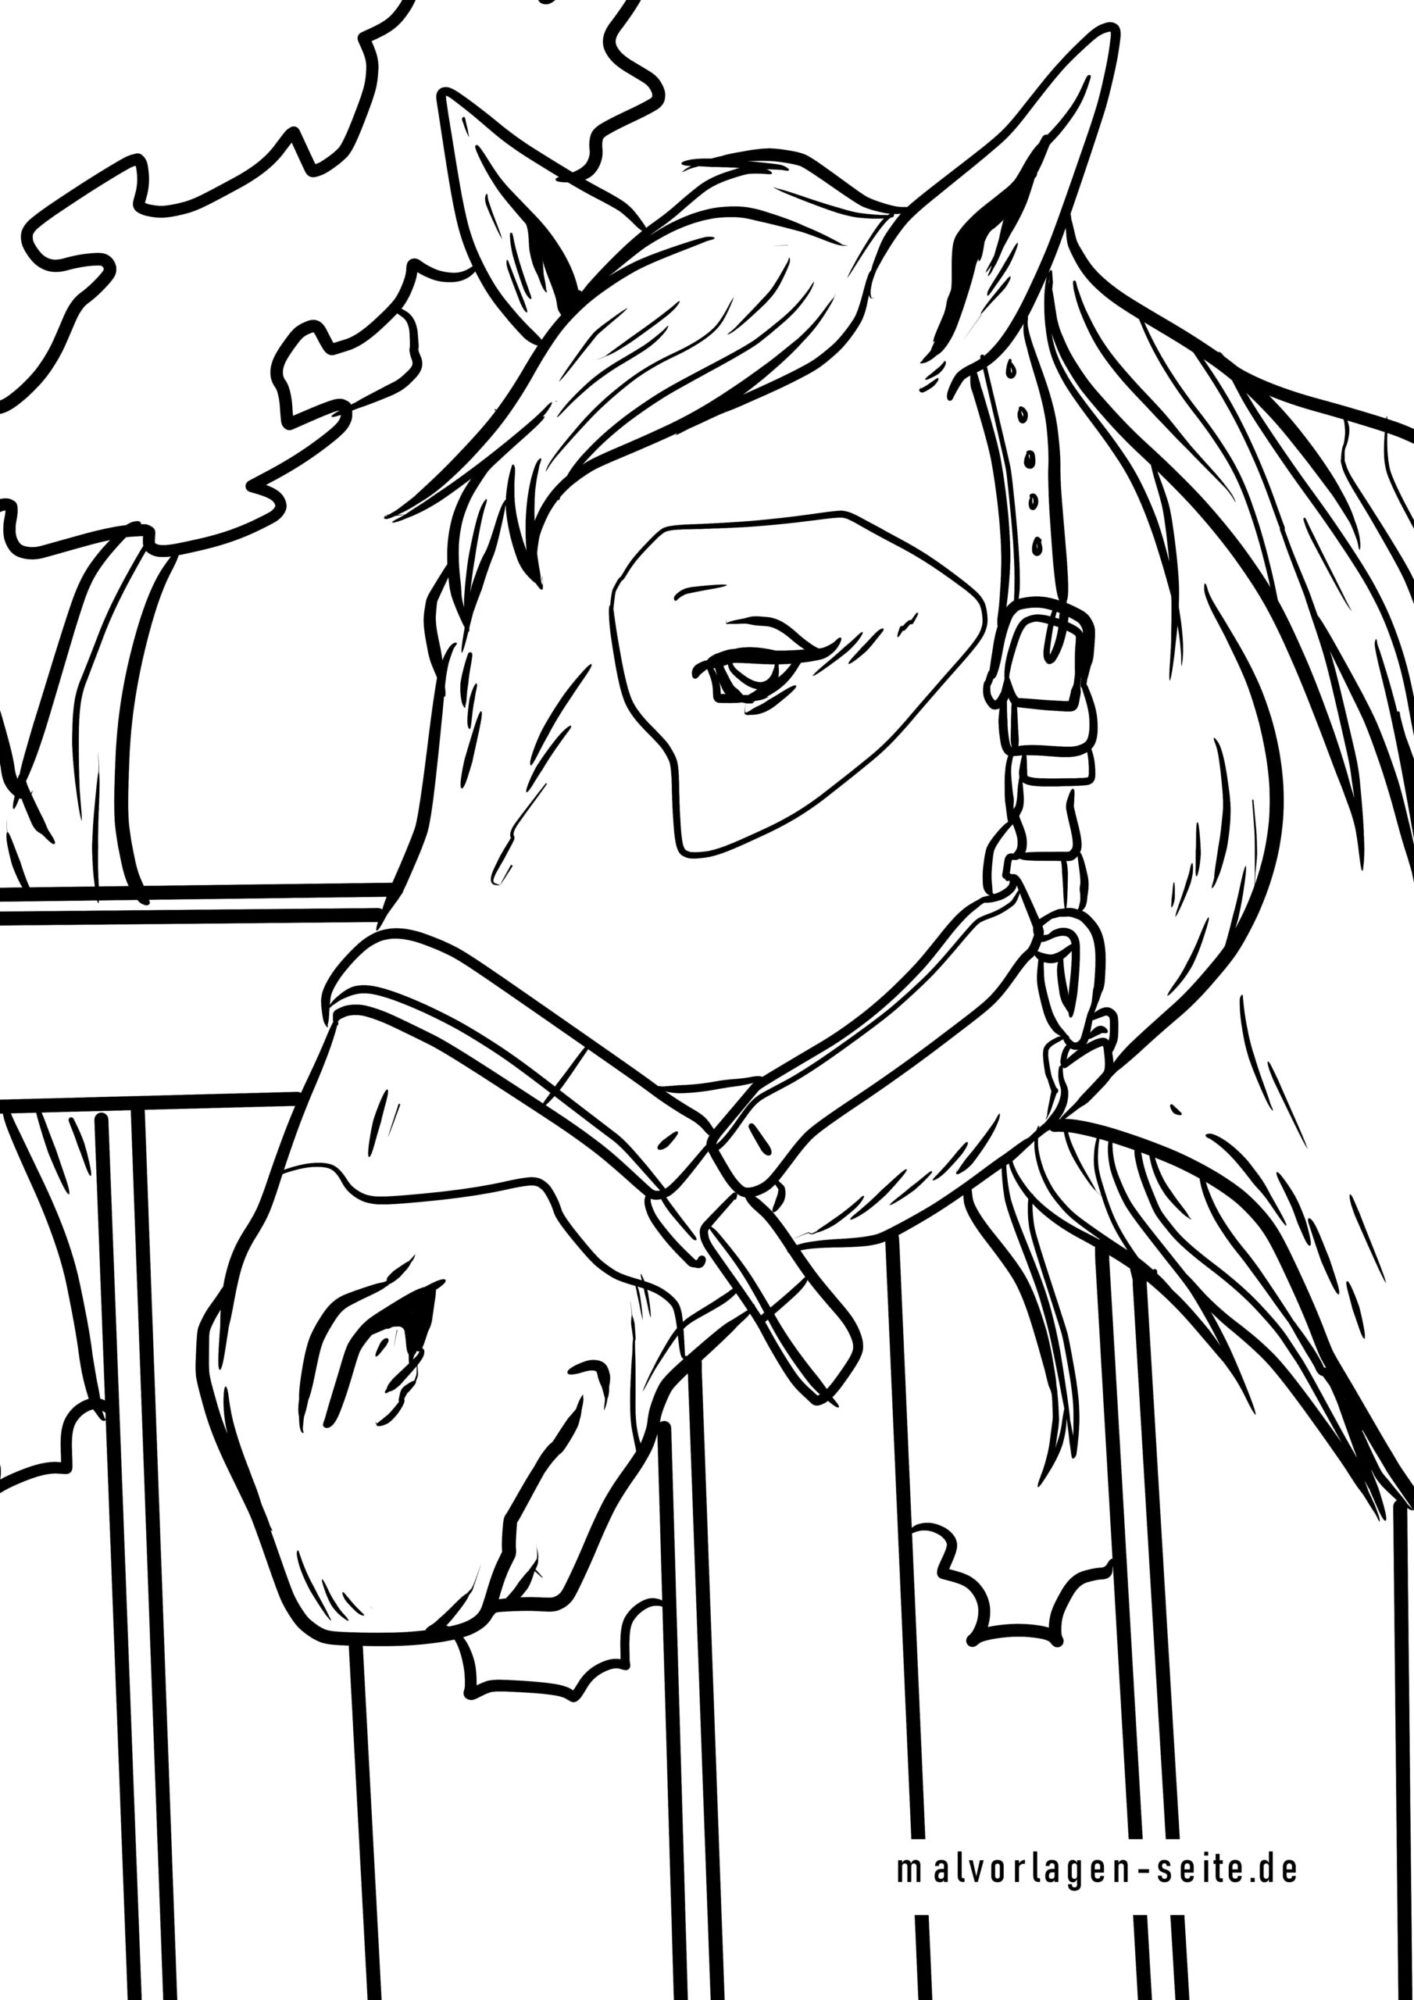 Malvorlage Pferdekopf | Pferde - Kostenlose Ausmalbilder ganzes Ausmalbilder Pferde Kostenlos